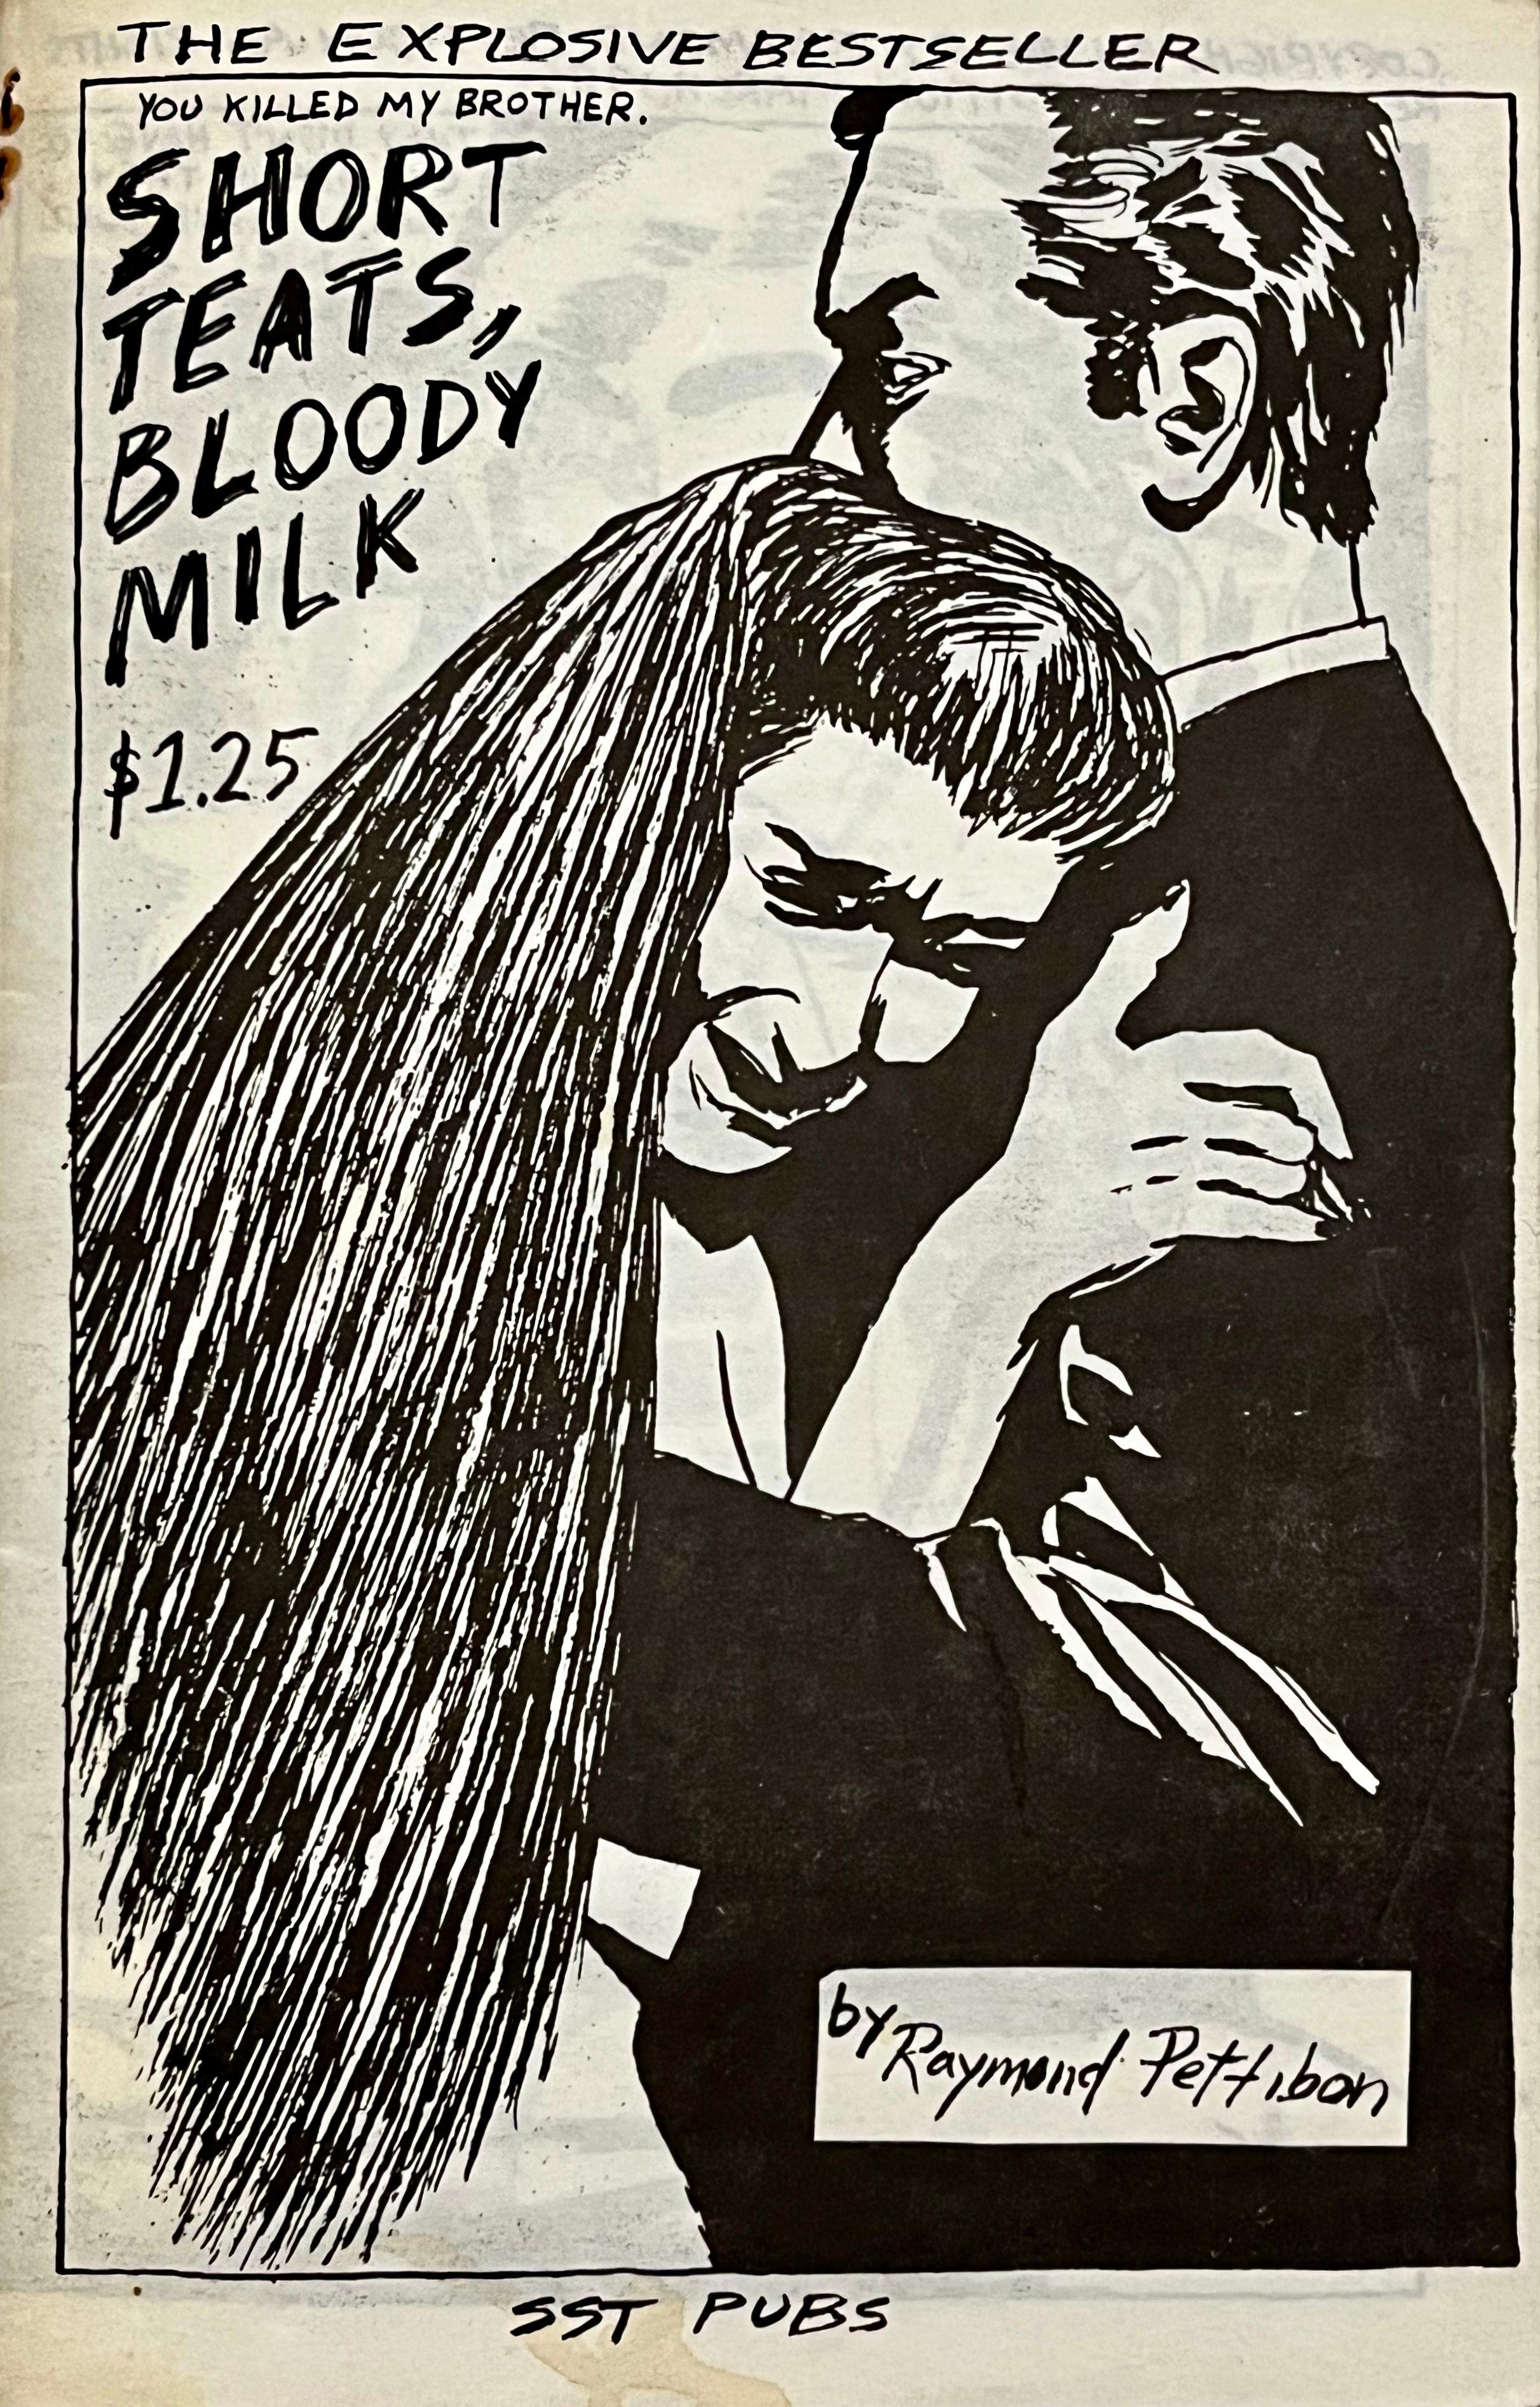 Raymond Pettibon, Bloody Milk 1985 (Raymond Pettibon zine)